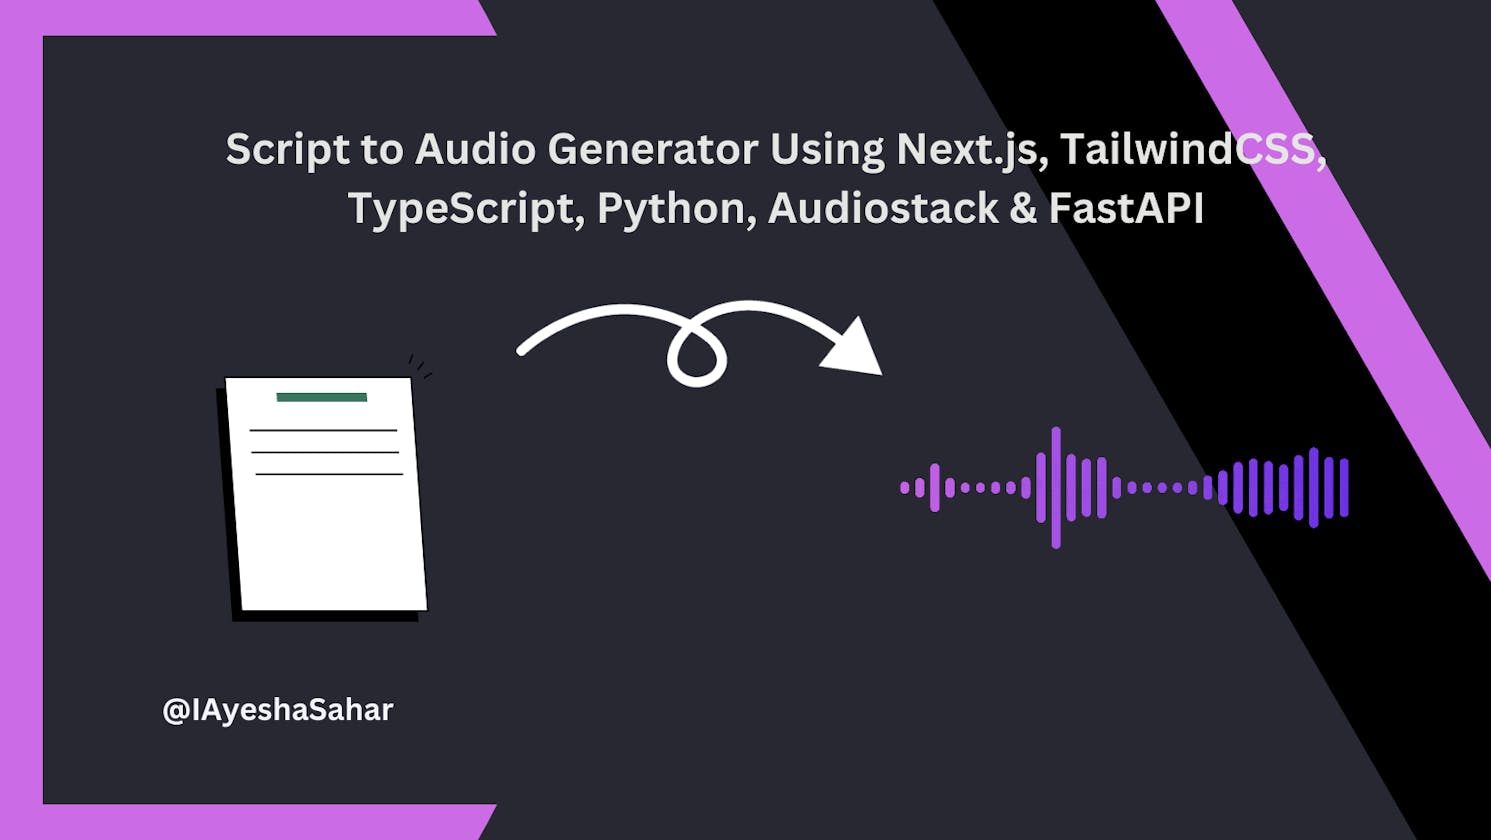 Script to Audio Generator Web App Using Next.js, TailwindCSS, TypeScript, Python, Audiostack & FastAPI